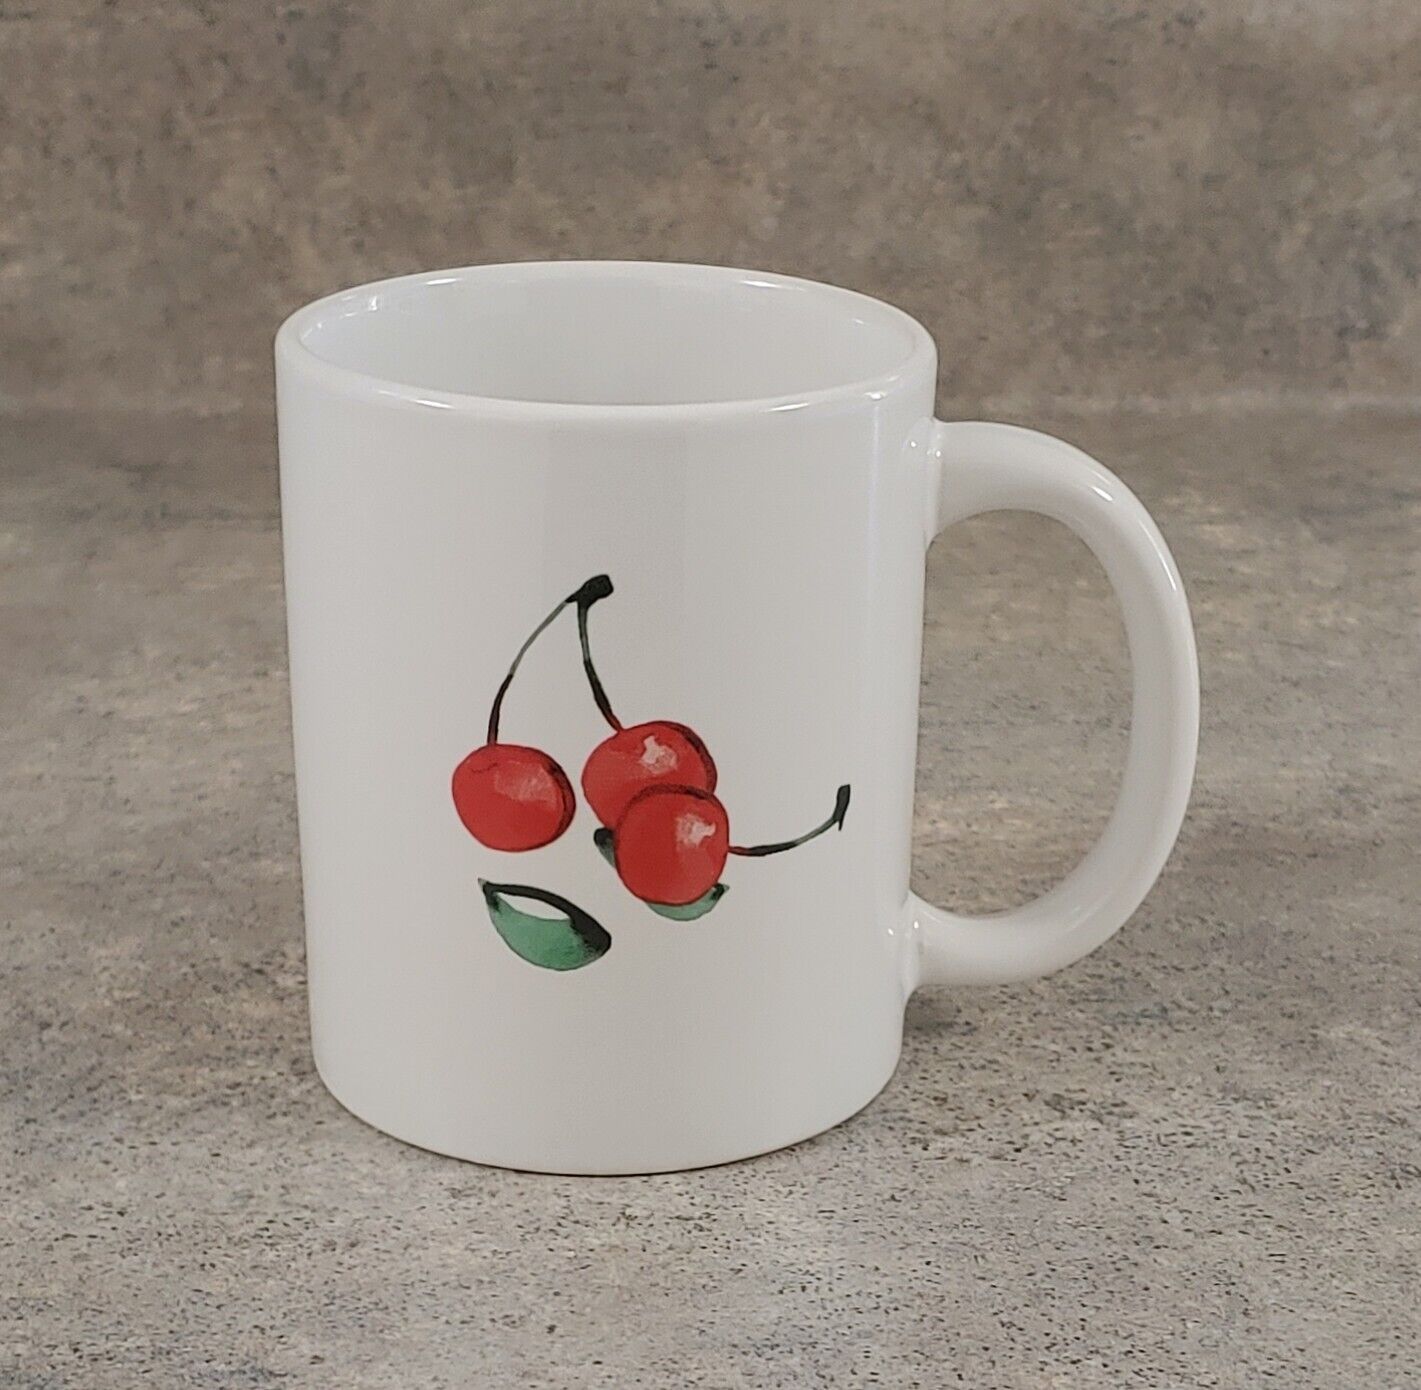 Decorative Cherries Ceramic Cup Mug